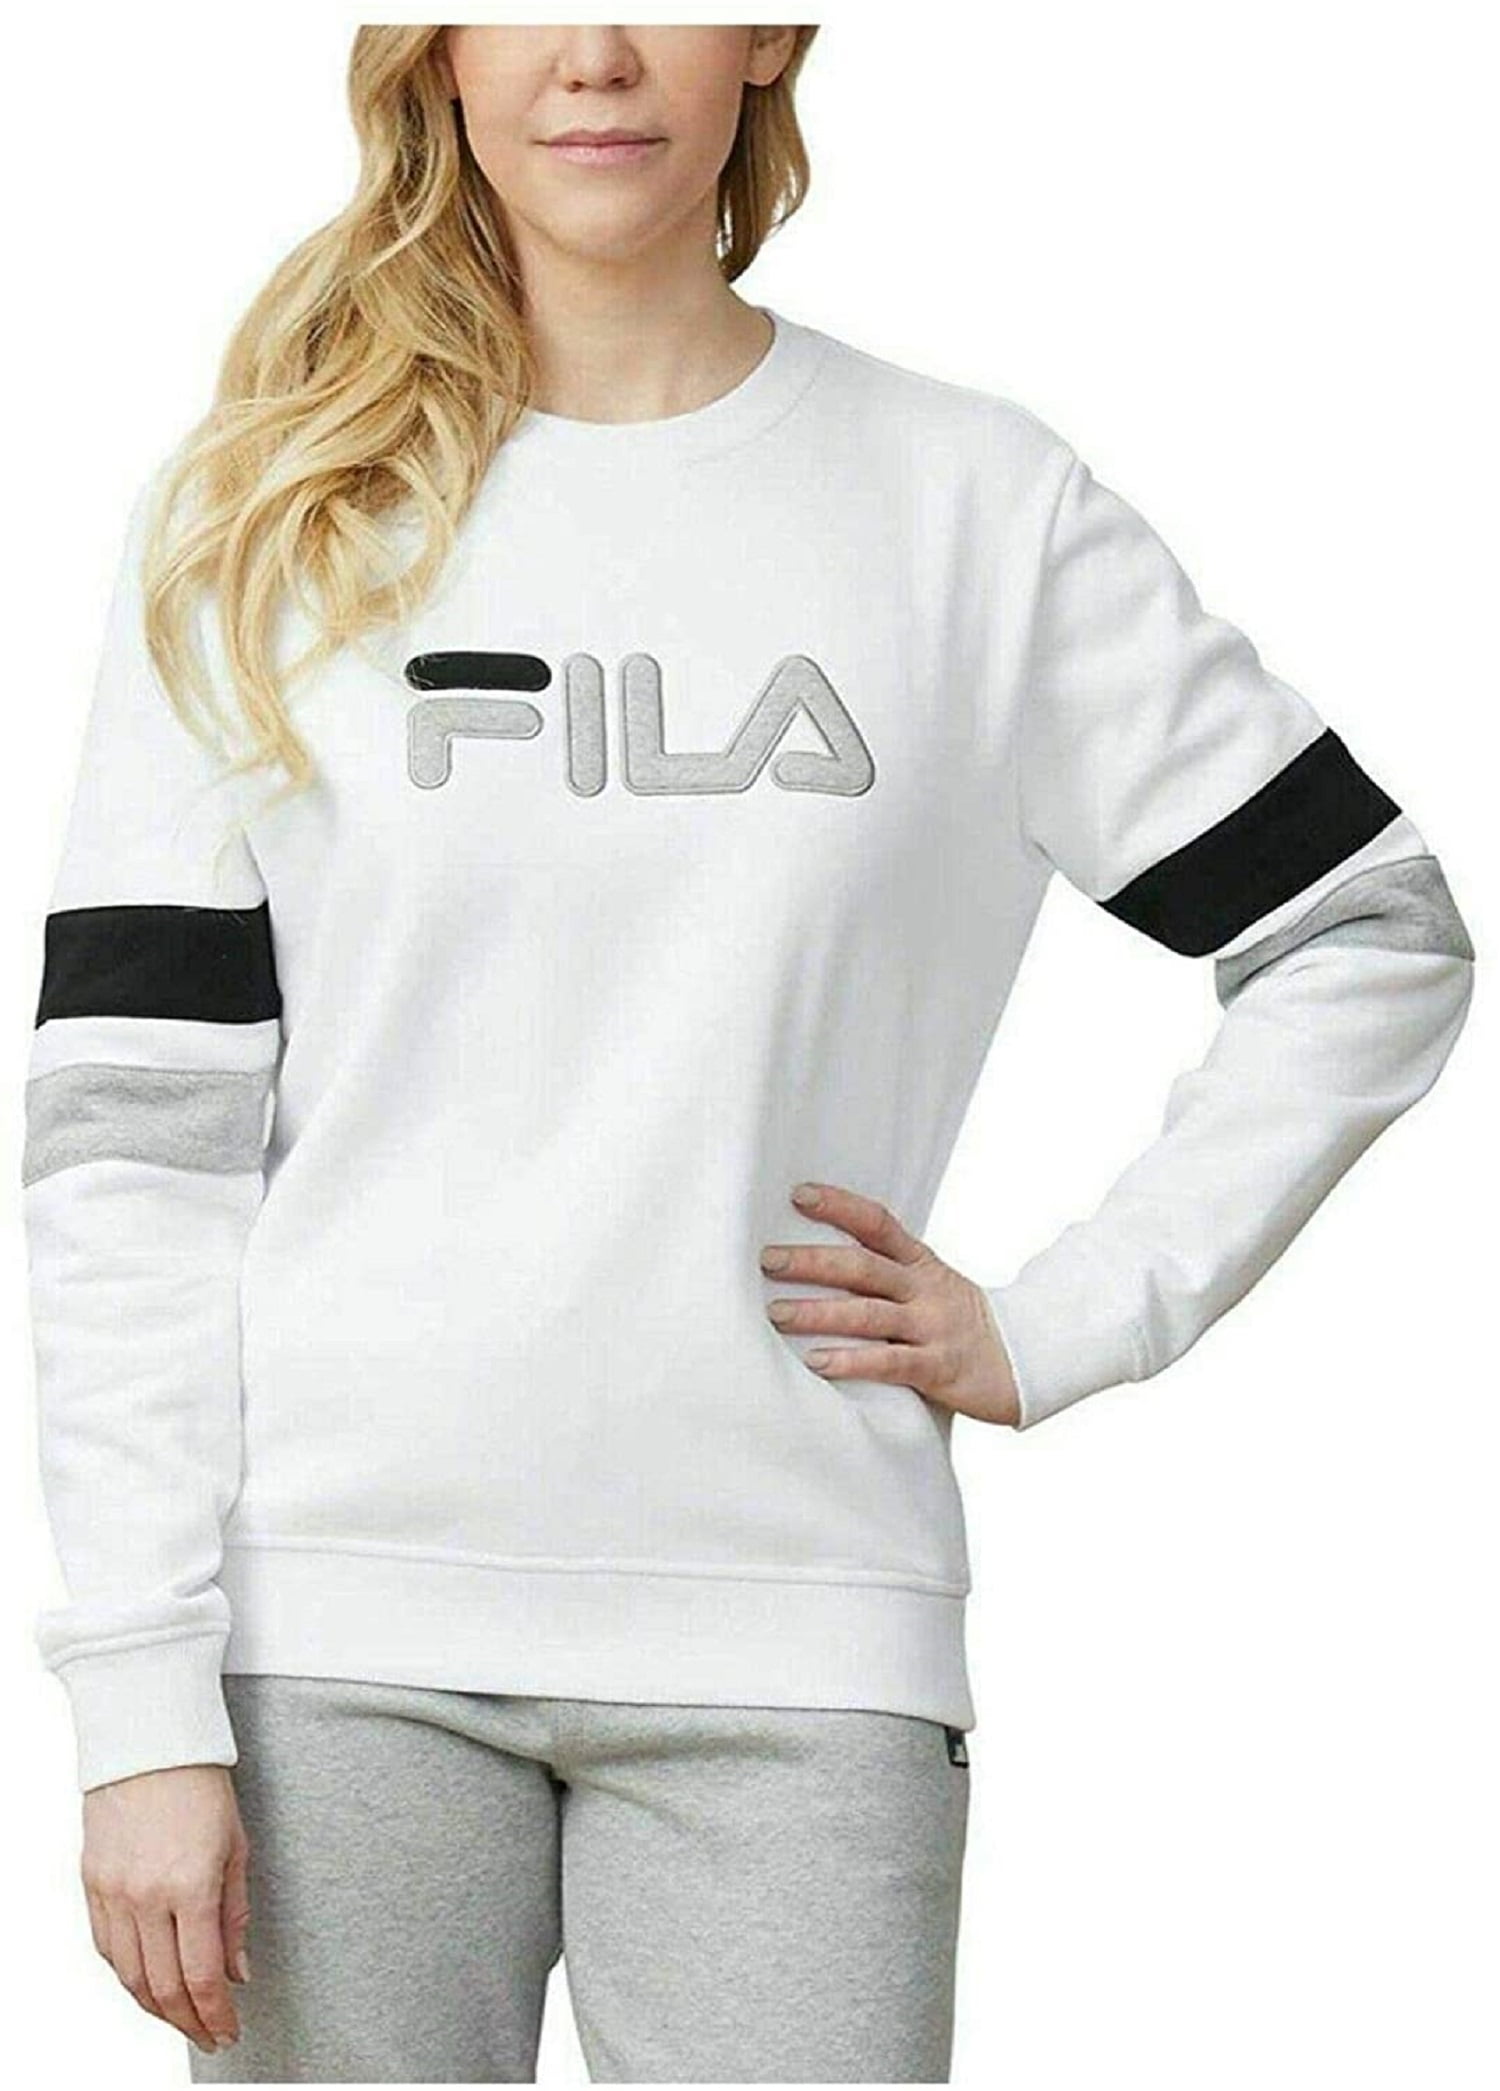 Fila Womens Natalie Pullover Crewneck Sweatshirt, White, S - Walmart.com